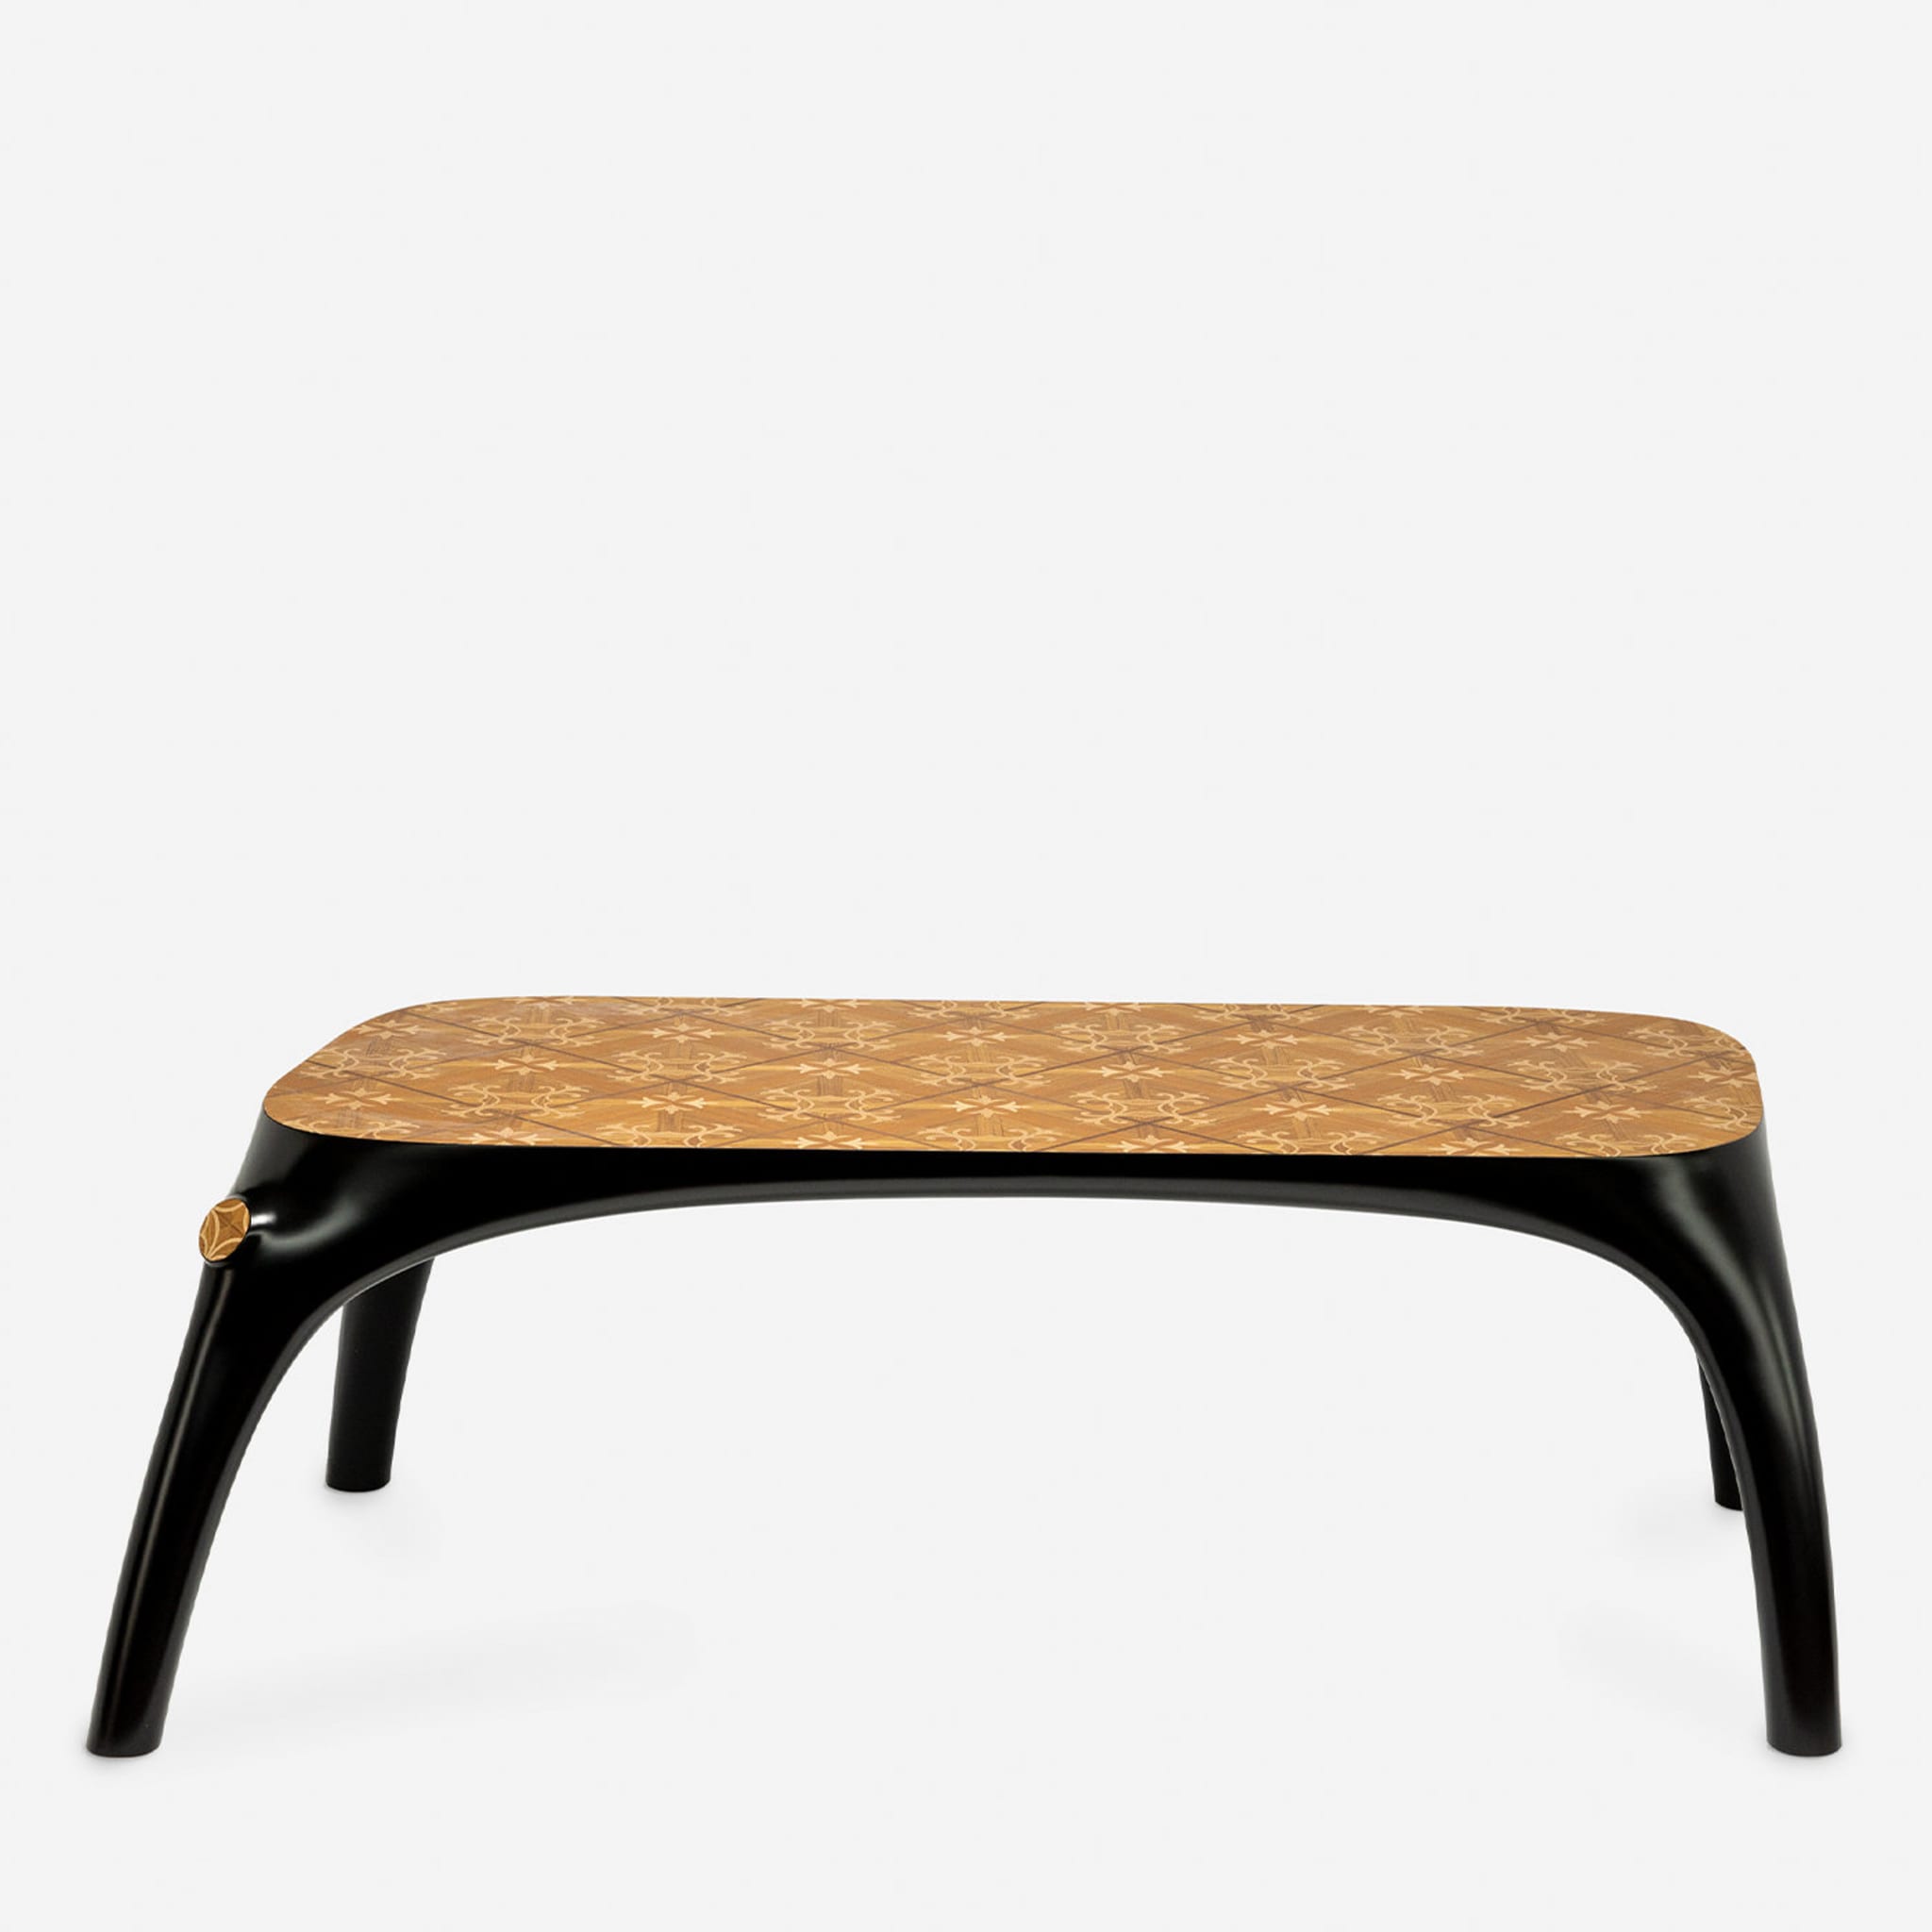 Stump Table by Marcantonio - Alternative view 1